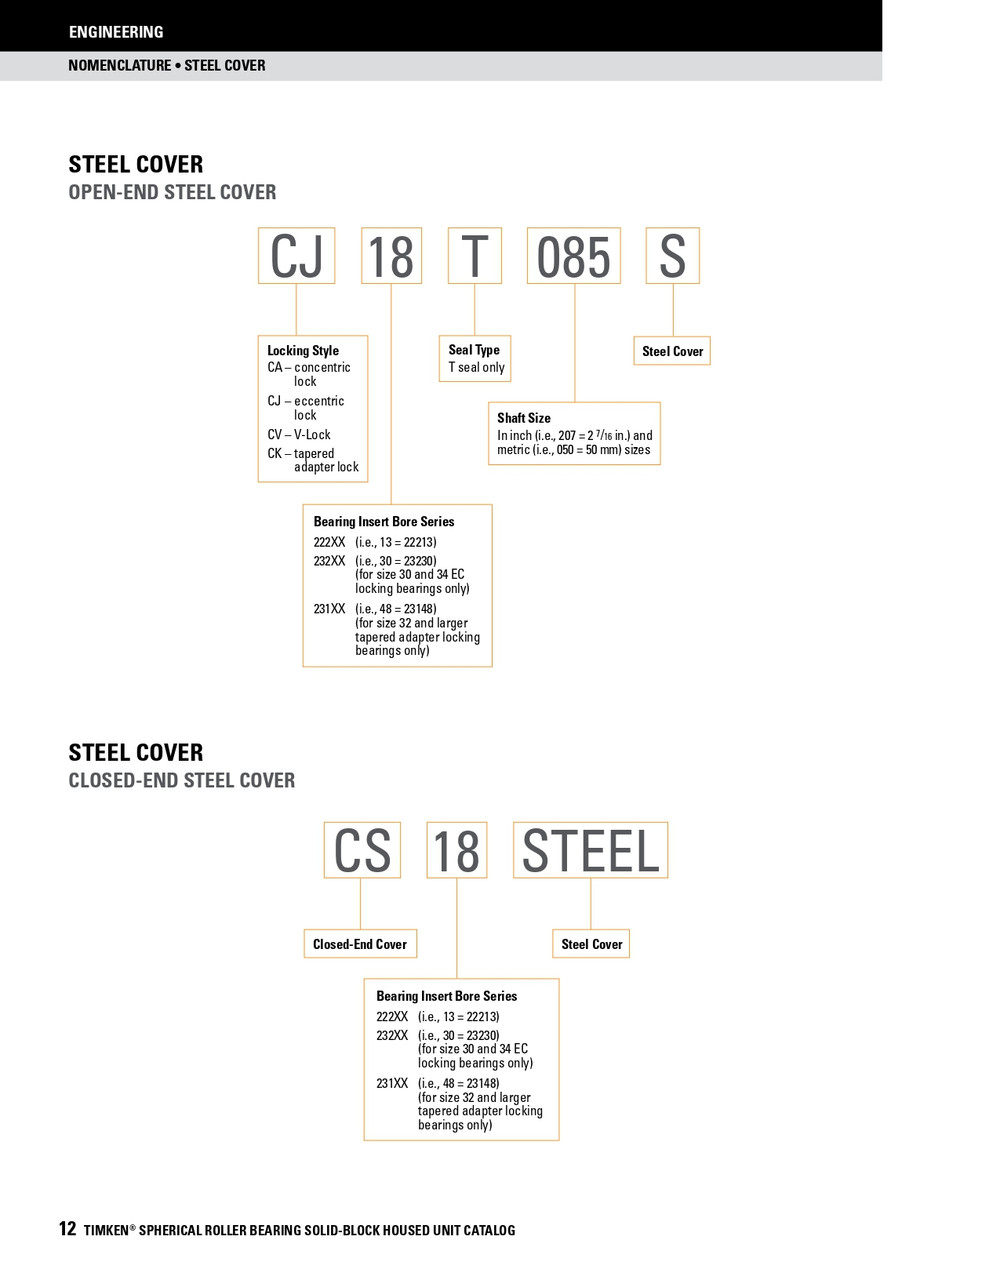 55mm Timken SRB Steel Open End Cover w/Teflon Seal - QV V-Lock® Type   CV12T055S